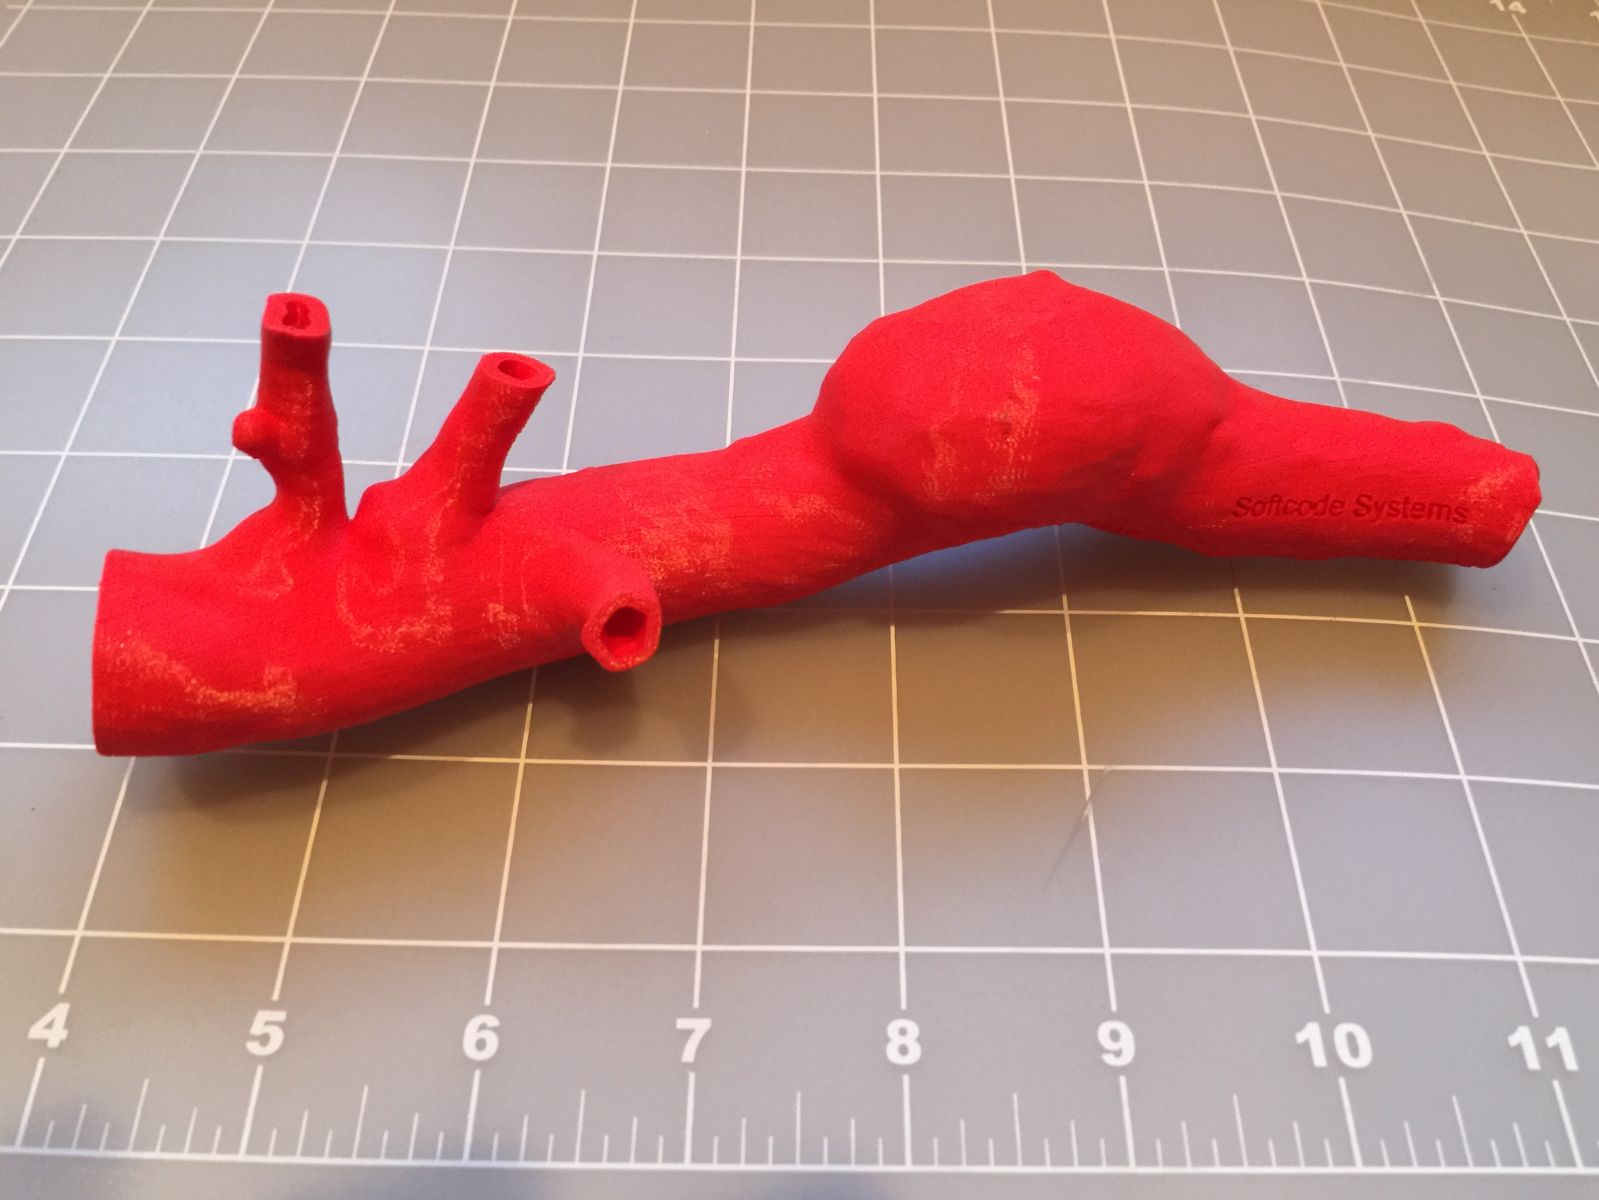 Life size 3D printed abdominal aortic aneurysm model